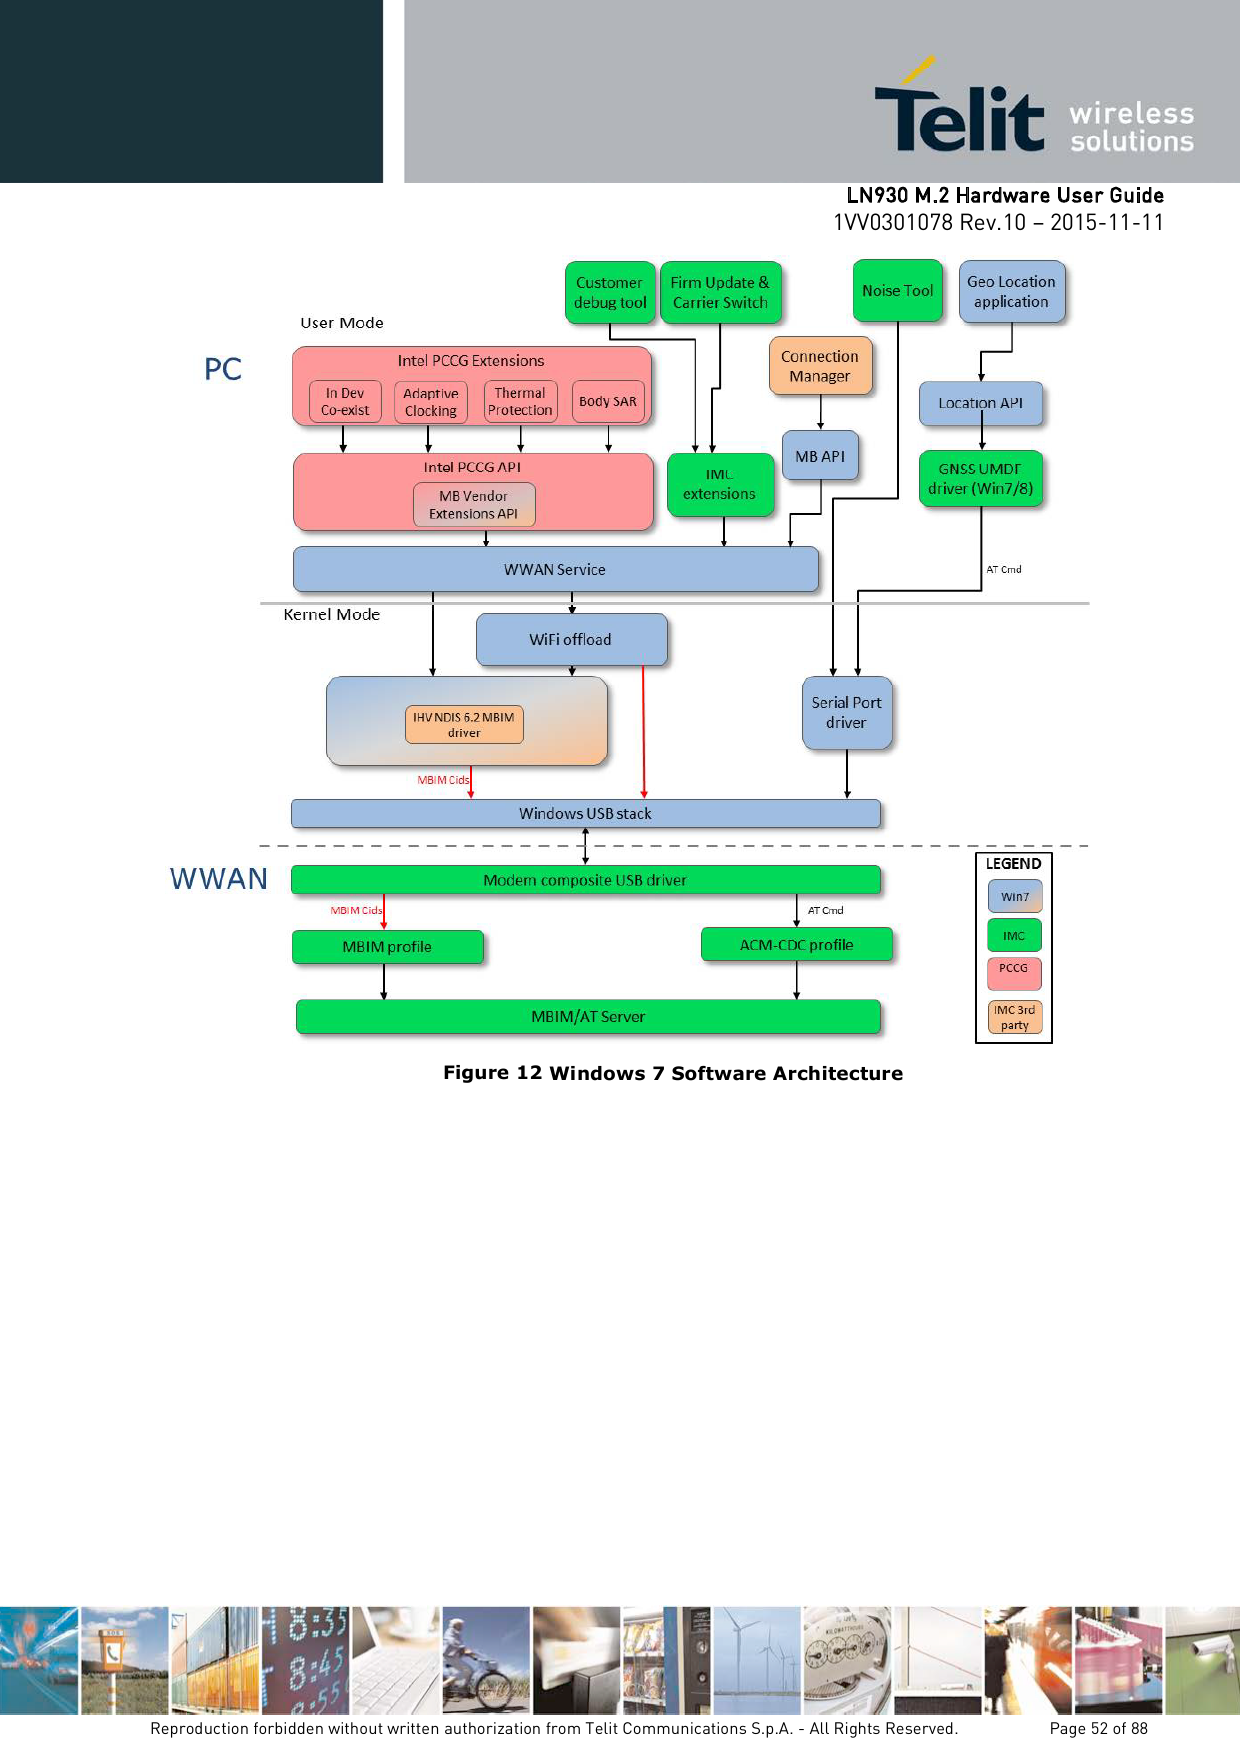   Figure 12 Windows 7 Software Architecture